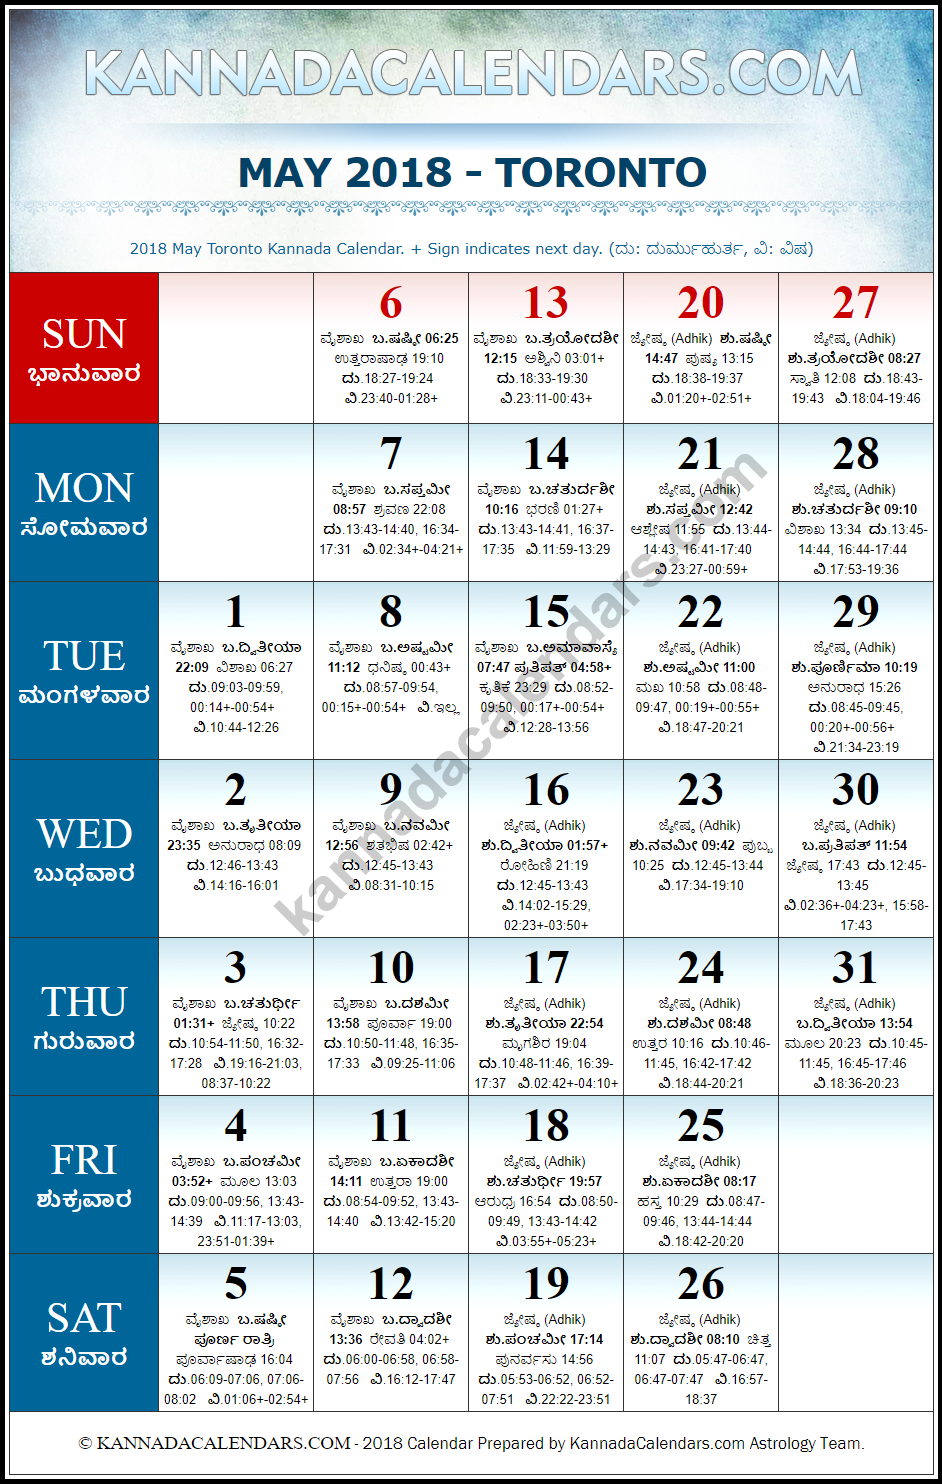 May 2018 Kannada Calendar for Toronto, Canada